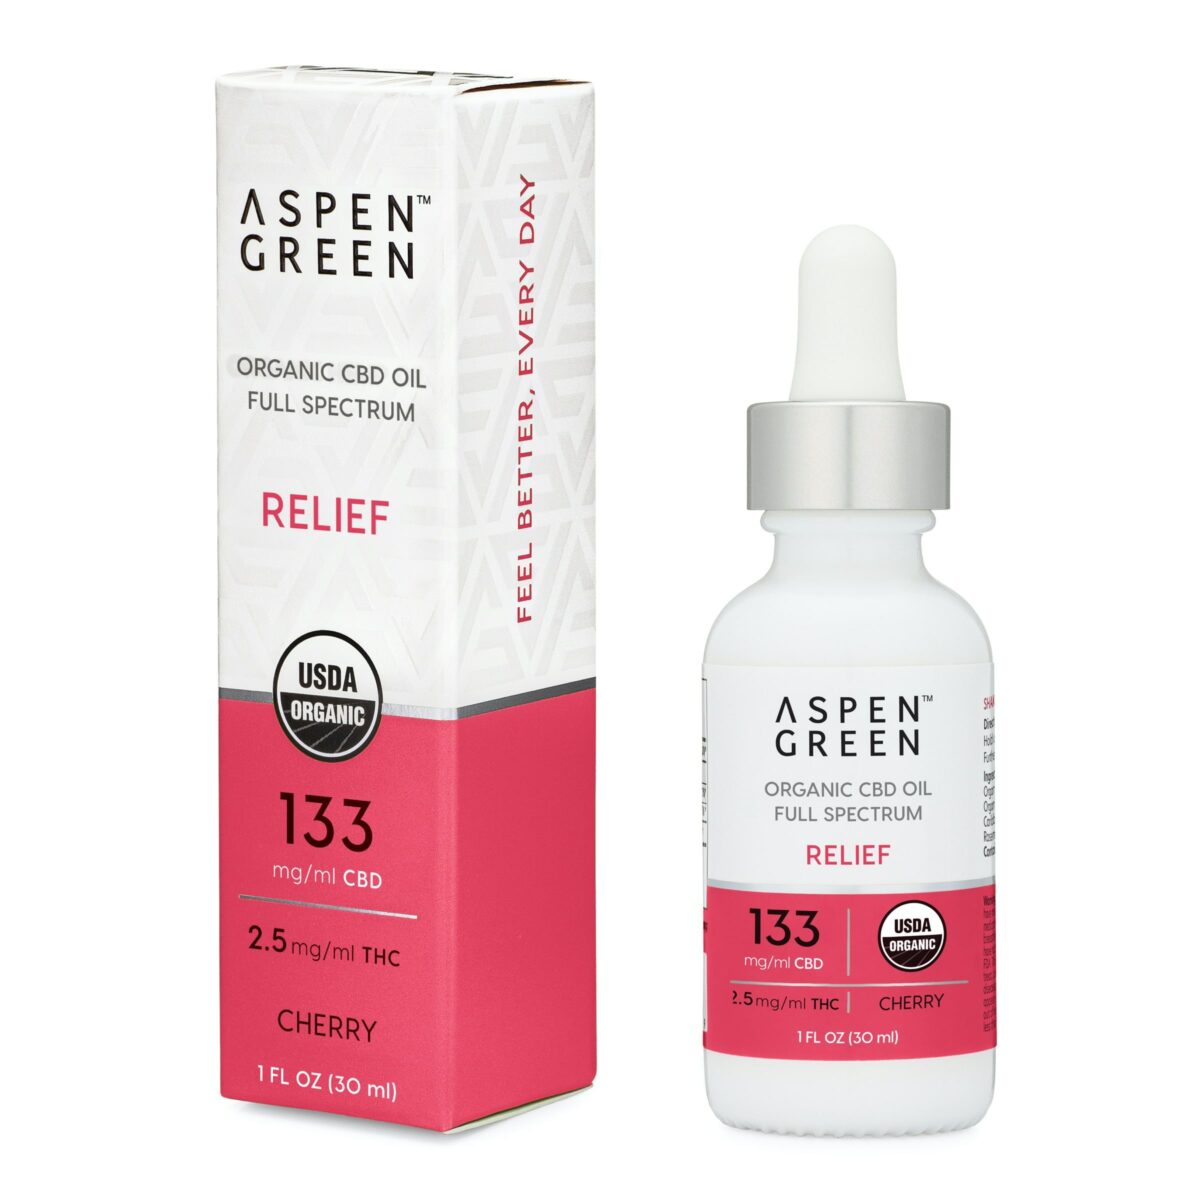 Aspen Green USDA Certified Organic CBD Oil with box, Relief (133mg/ml CBD), Cherry Flavor